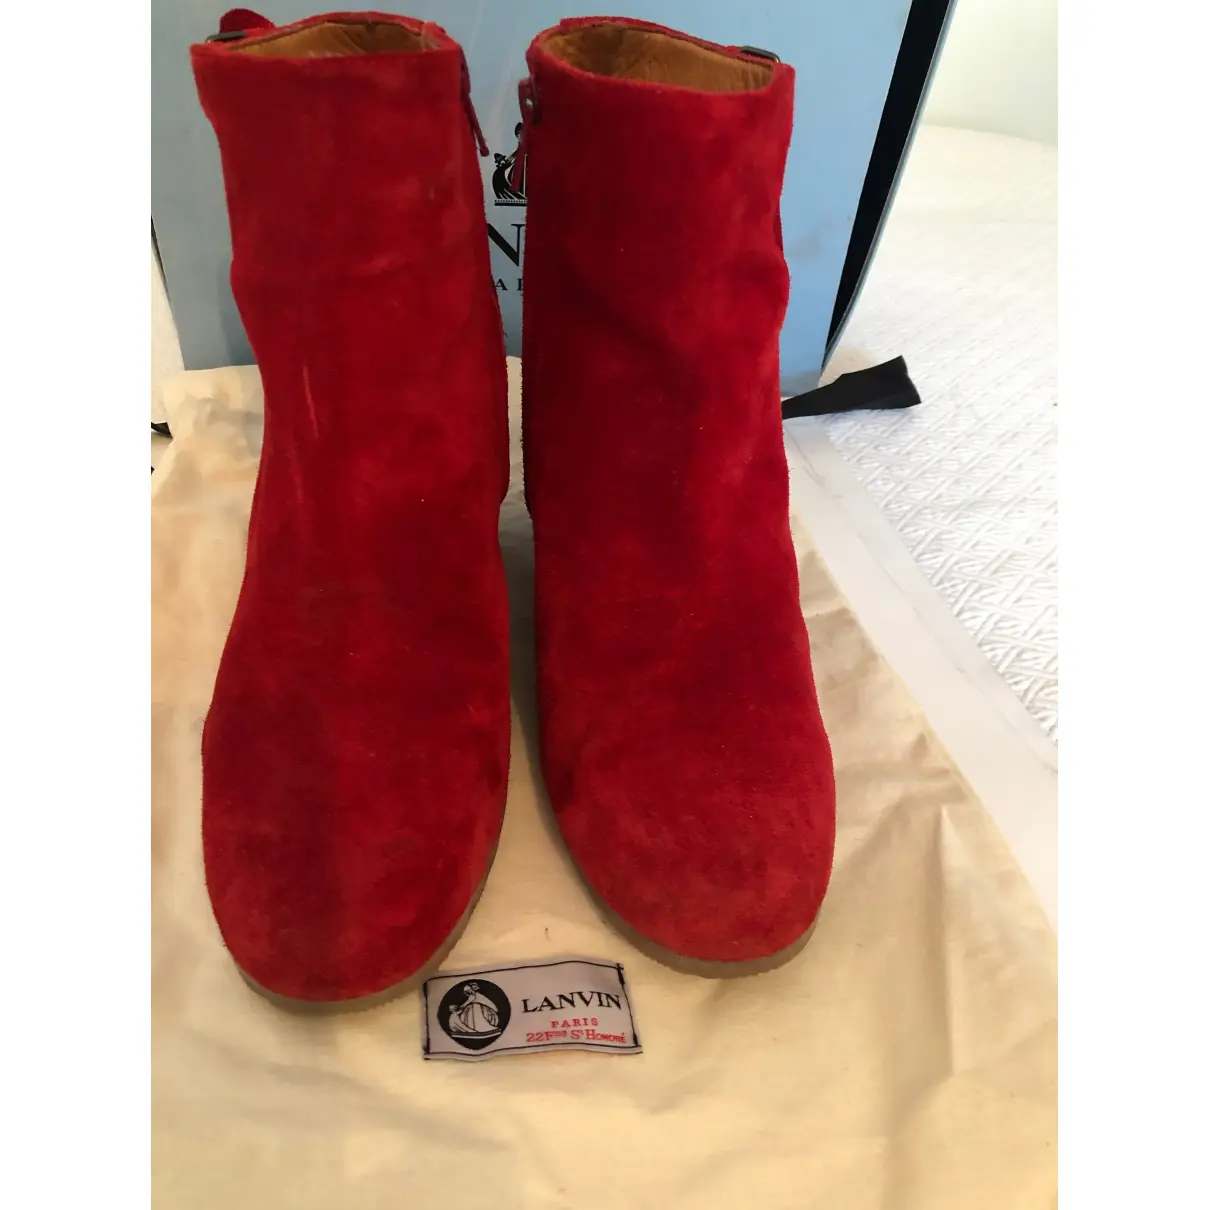 Buy Lanvin Buckled boots online